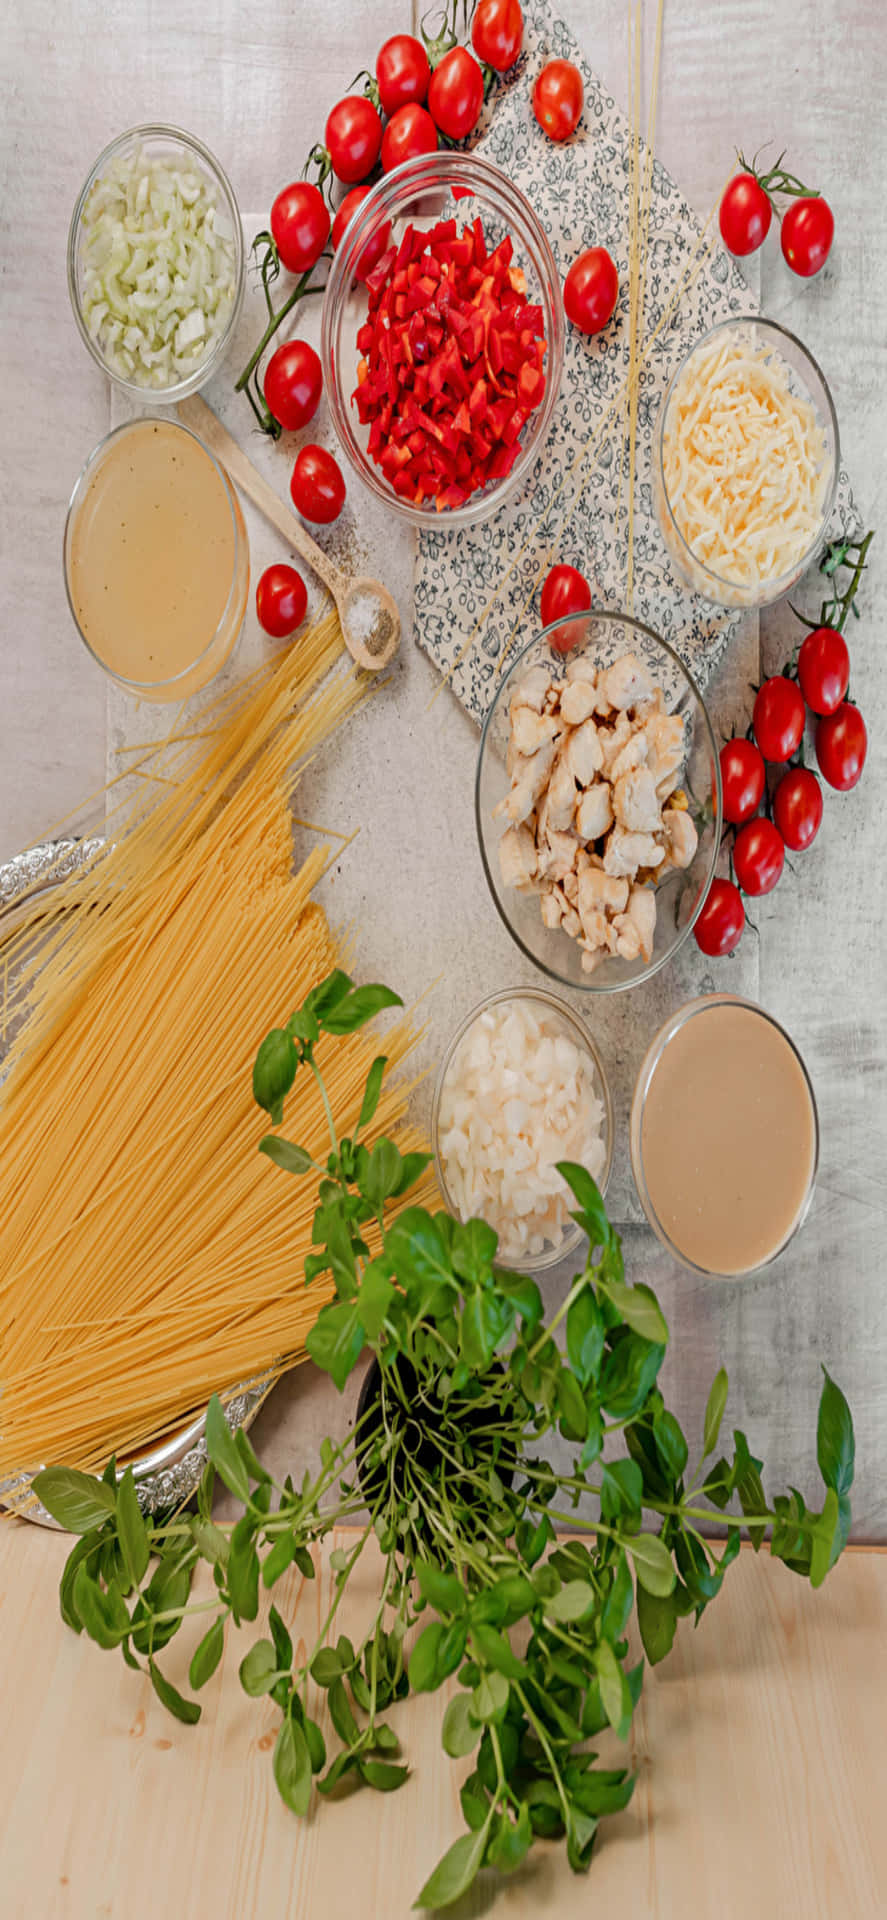 Spaghetti Dish Ingredients iPhone X Pasta Background